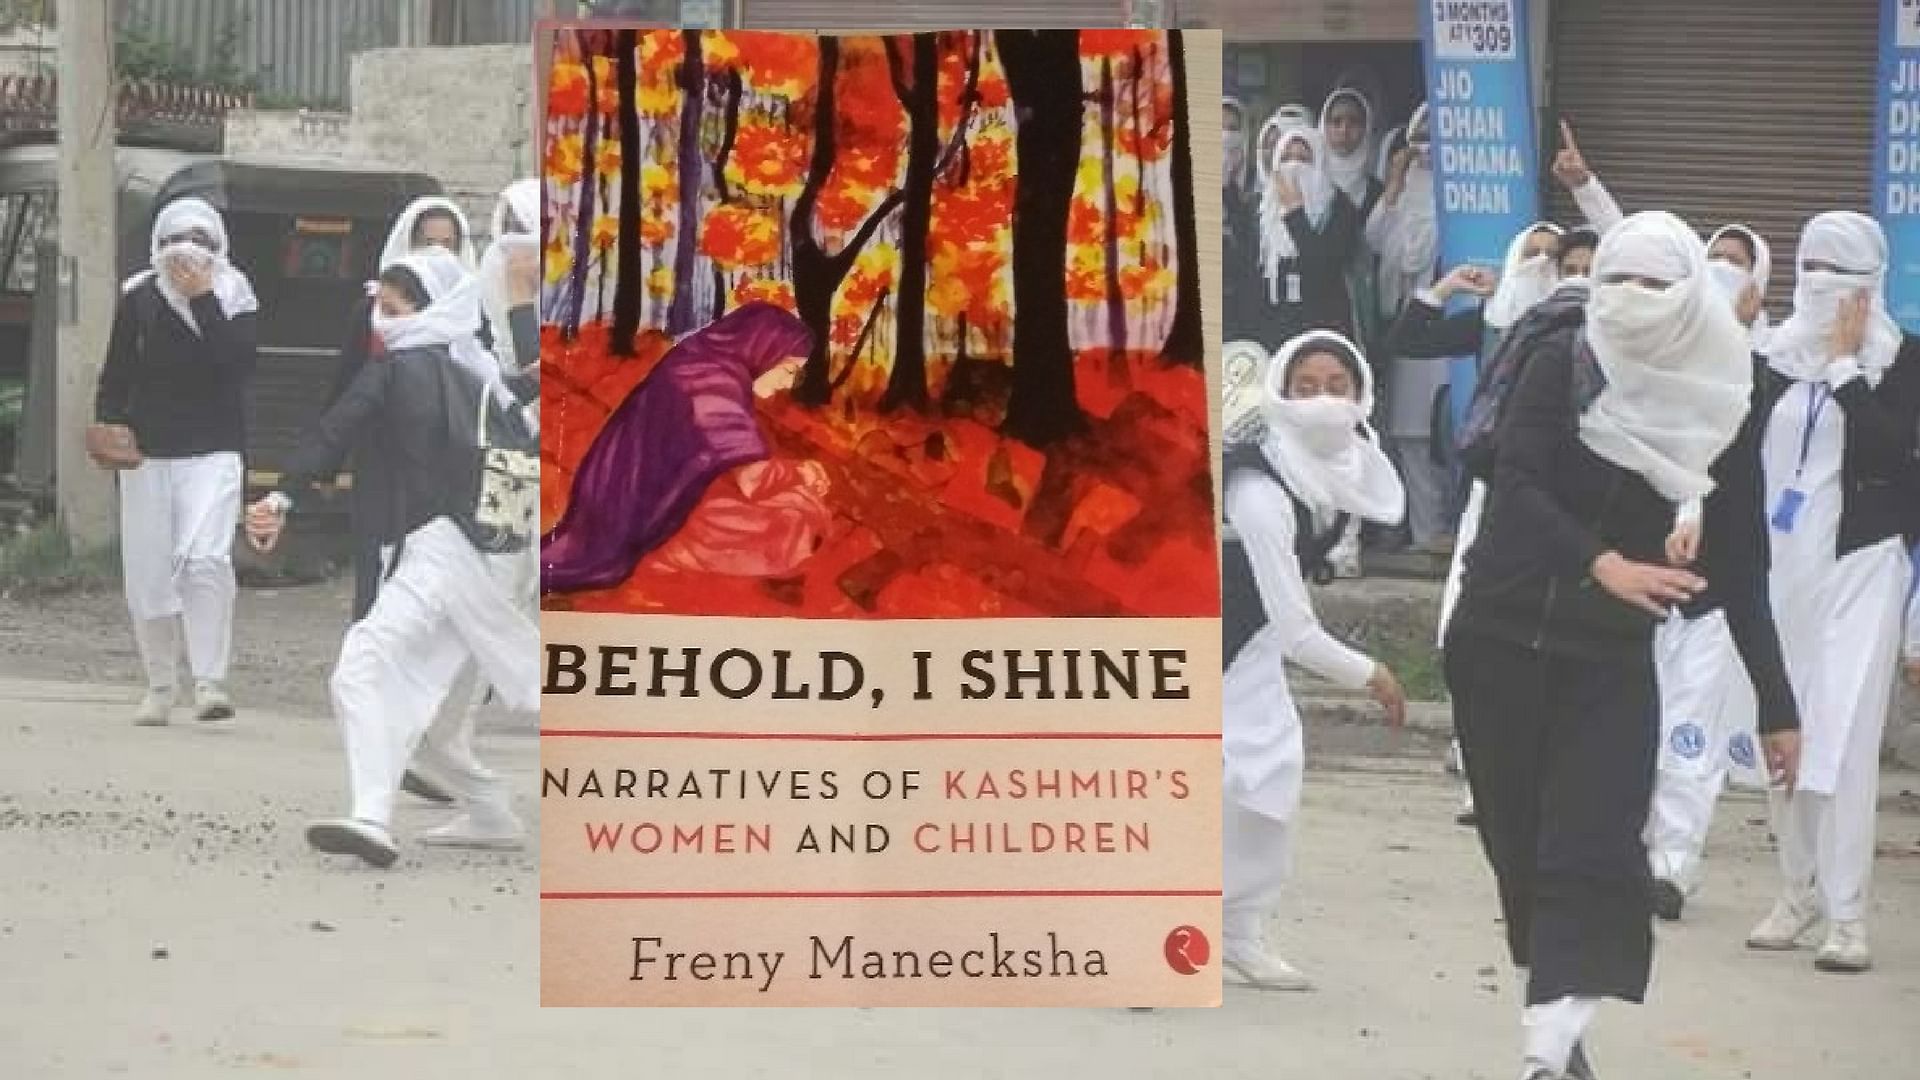 

<i>Behold, I Shine</i> gives voice to Kashmir’s women in print. (Photo courtesy: Rupa Publications/ <a href="https://www.facebook.com/photo.php?fbid=1038925176209393&amp;set=basw.Abr4nlfLIHK0GVhbq4MSlzo_BV3AKChF7apw-GDvaDBpz010-xa4tS-J2eKYVEMqGWX-jgdOLVR05kqMmkLFivgaMU2-MR9AK-HwhHtga6UHaQkNPYRVIz0k9oZIQt11nm4Acx8vY88qvFfJC83pA-bBHZRYuF6O67nVQWRuoByJ3pEKBk8J-grNdgwJWBduhvY.503208253203907.10155873612598128.471539129679867.332772310401430.458099804379491.617945531637388.1038925176209393.1448370375486841.1200226303360383&amp;type=1&amp;opaqueCursor=AbpaV0CnsKdmS5VA_yiBuPmhKstoNMZ_xoOpG2hiMBa5jzcZyA1vjwRwaKxn0Do6nBTbL_GPUkRYyNF53Qlf746qq9HBuDHsS28nBe5bHrijNzrvgEhdrjVoq1NthiglHc62bOXsUsHsegnAC7luCkXZw_a9IxYdL_wBxgw-W7fJc2EJwcXoLk2JY92rGNQVG3nEsm0k11UV9f3e61s7wJ32v_QS_9nj6ePS96L8fFdsGDNtLvmatFoa70MHS1tJ14gJ_UBnMjJXkPEsF7Y7UkoDAIPC_F1ClHZxocIk63Z1vV51S4541CejD7IzsfrcYLskh_TCJgtsmk6M7IC6fo5kEMyKT4_S8NU0weJyUYl13Oj0rjijrgVk2OYBszKOuNgn_ajppssuli_6nFNkVgEKuoEOs6JUQWShjv9OcyLcDzwkODBVi-CqTcLpOvjkSD8DgqBjOeGBLQSRKLgL60d4N4wJ0yKobh7rITT8XMv0jF2frlxIBPTcBbBr3mtimMKODXWPu4wyBY5BmaPt1D8UOamiiZgjIGZLVMkMoNyXlzZ9RdToxdL6ALldaVpsou8mX8rycasn3e0v2bXidj8sL7mpLXtPBaKmvvLDAVCoZA&amp;theater">Facebook/ kandaswamykatithan</a>)